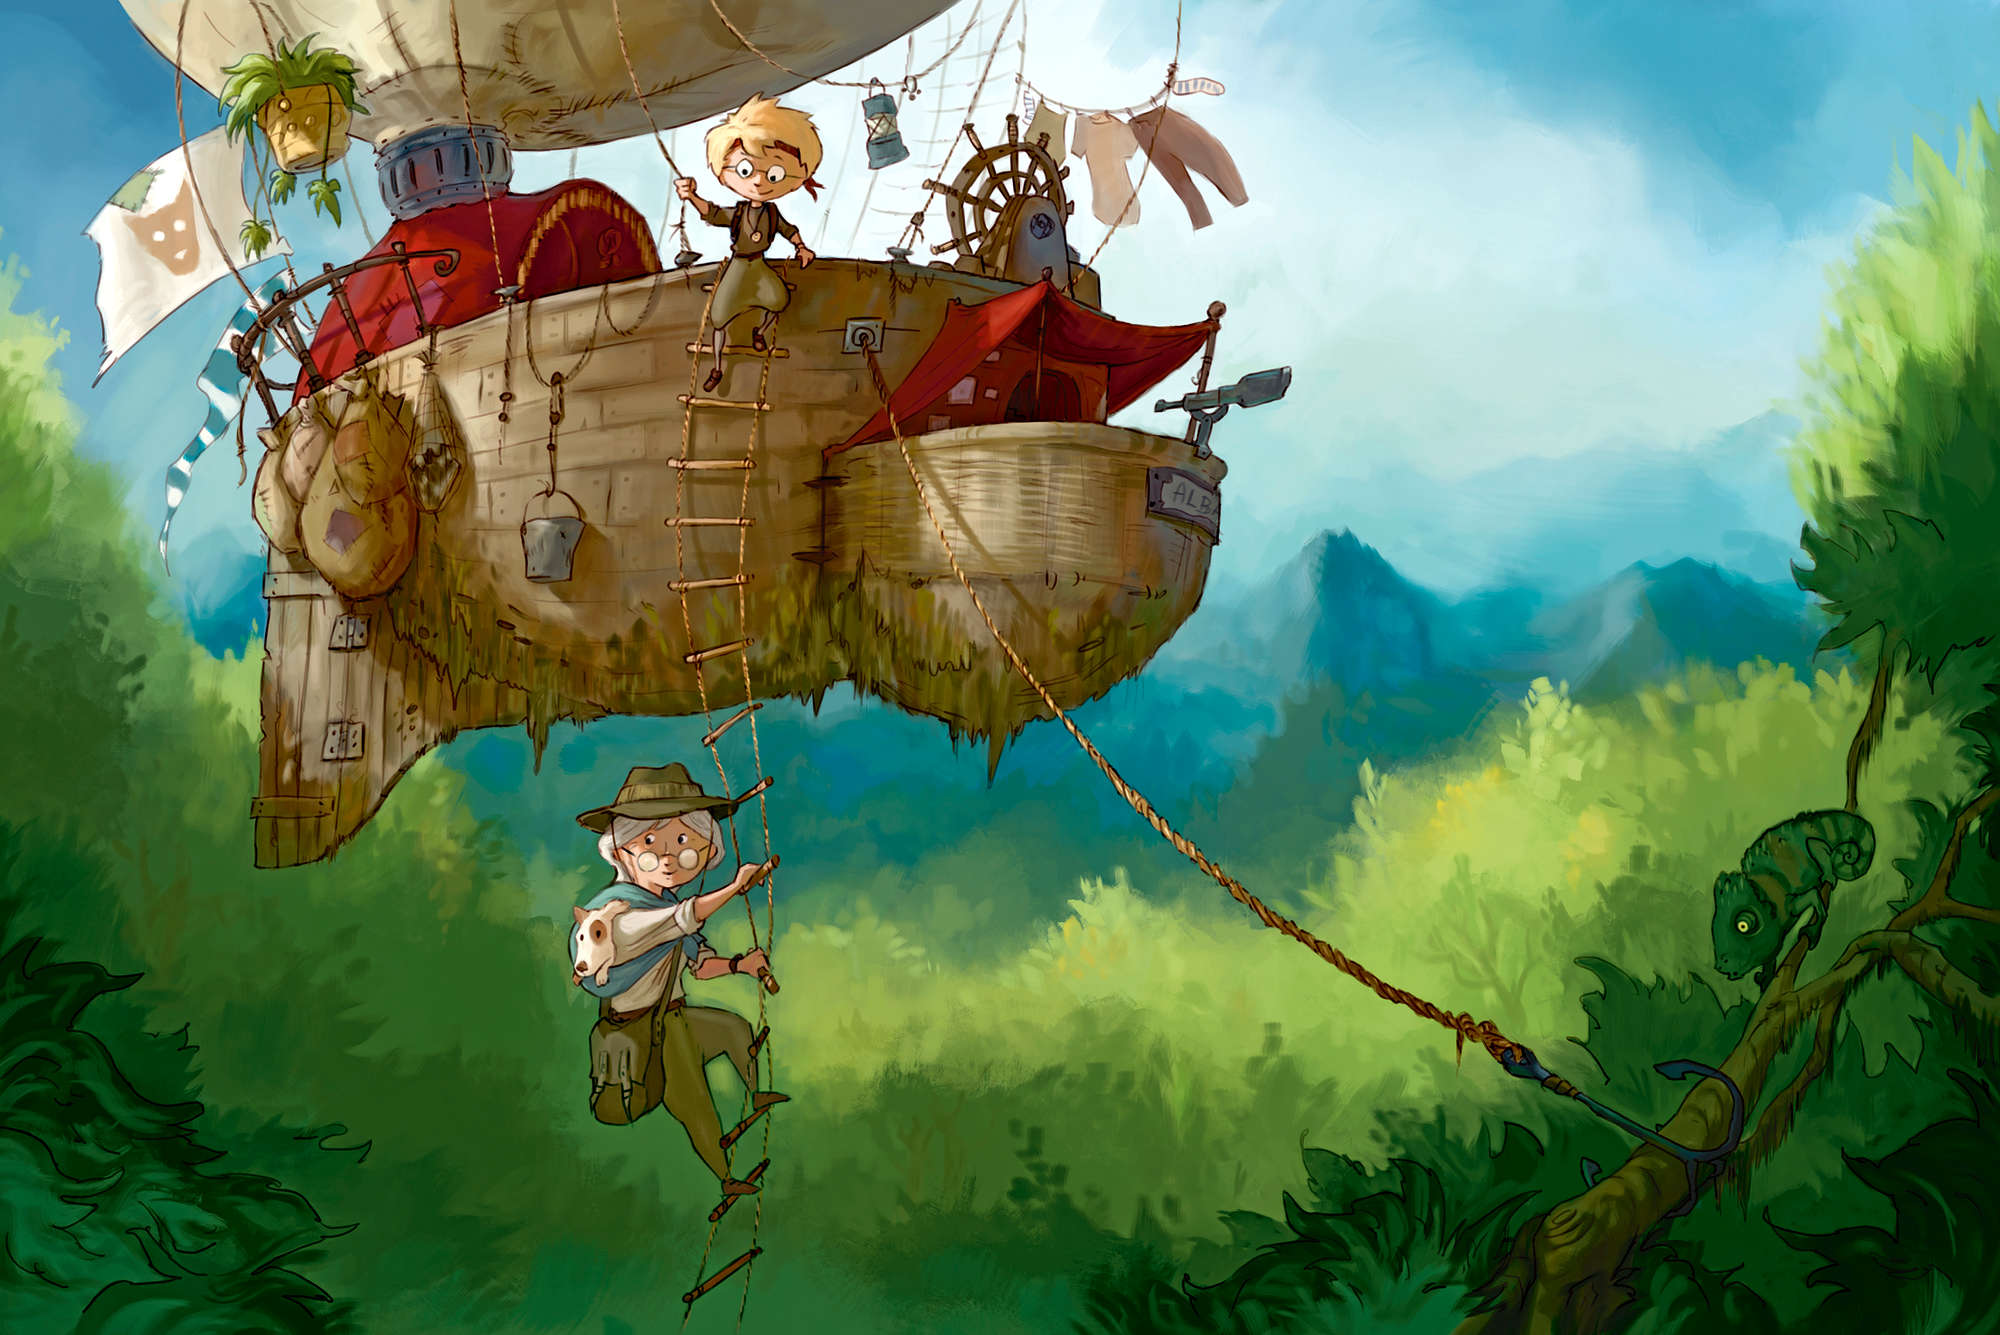             Kids mural adventurer with flying ship on matt smooth non-woven
        